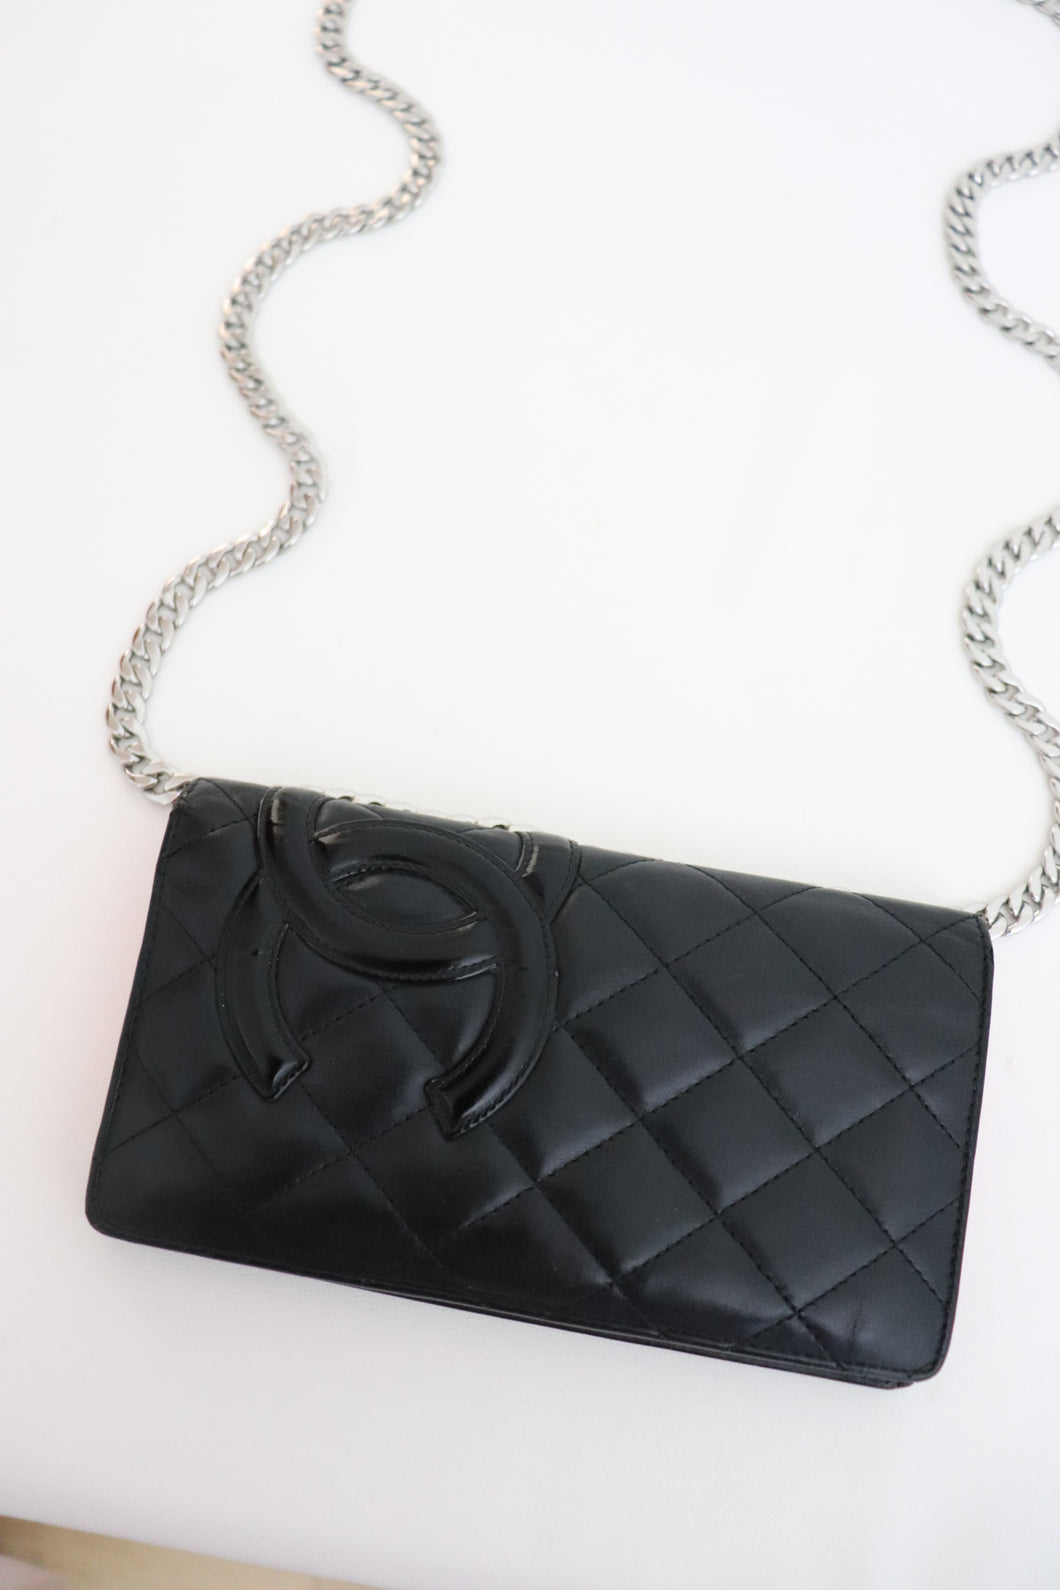 Chanel quilted black vintage wallet